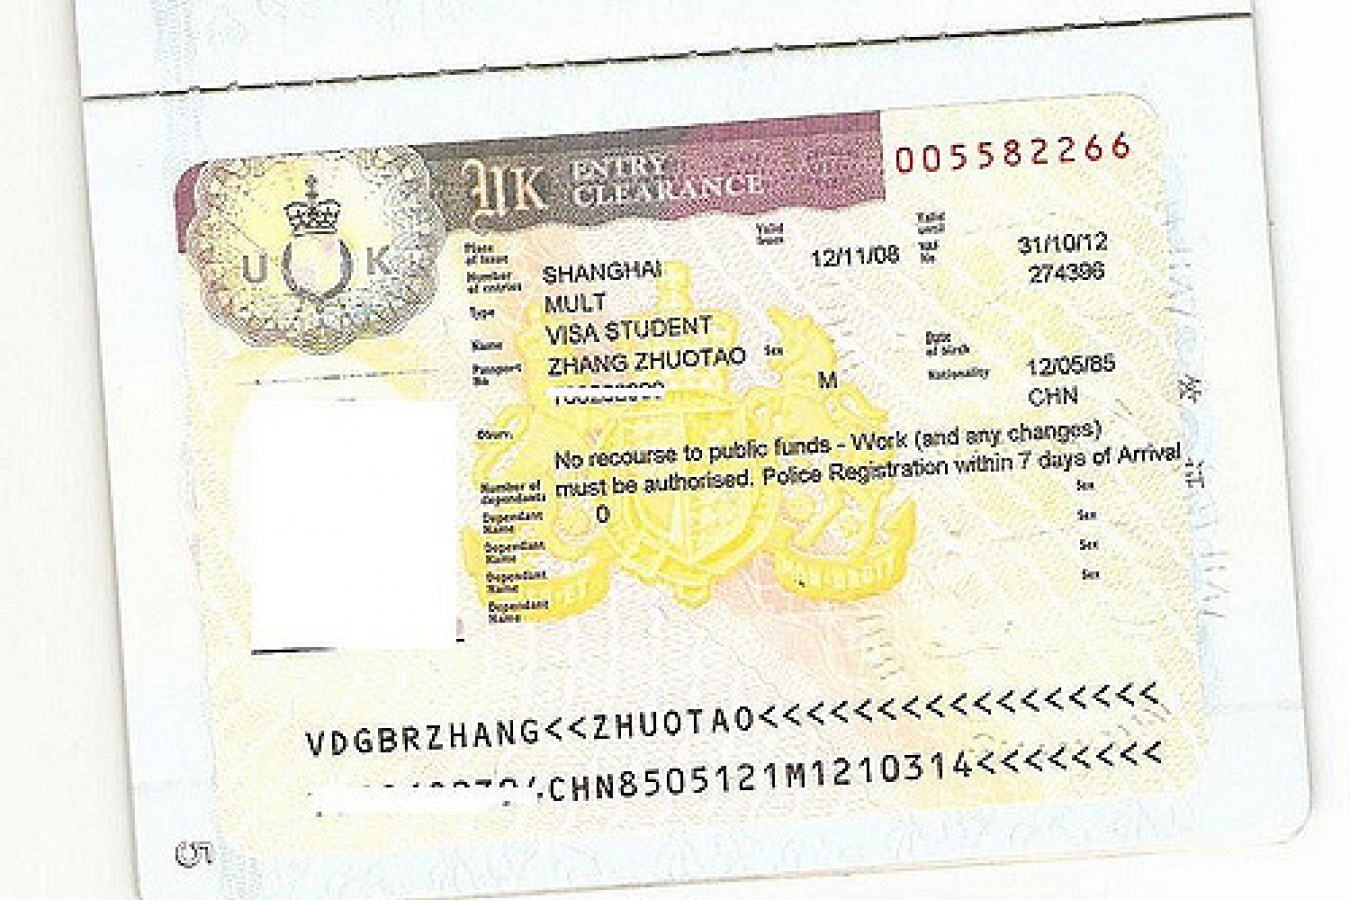 UK Entry Clearance Visa